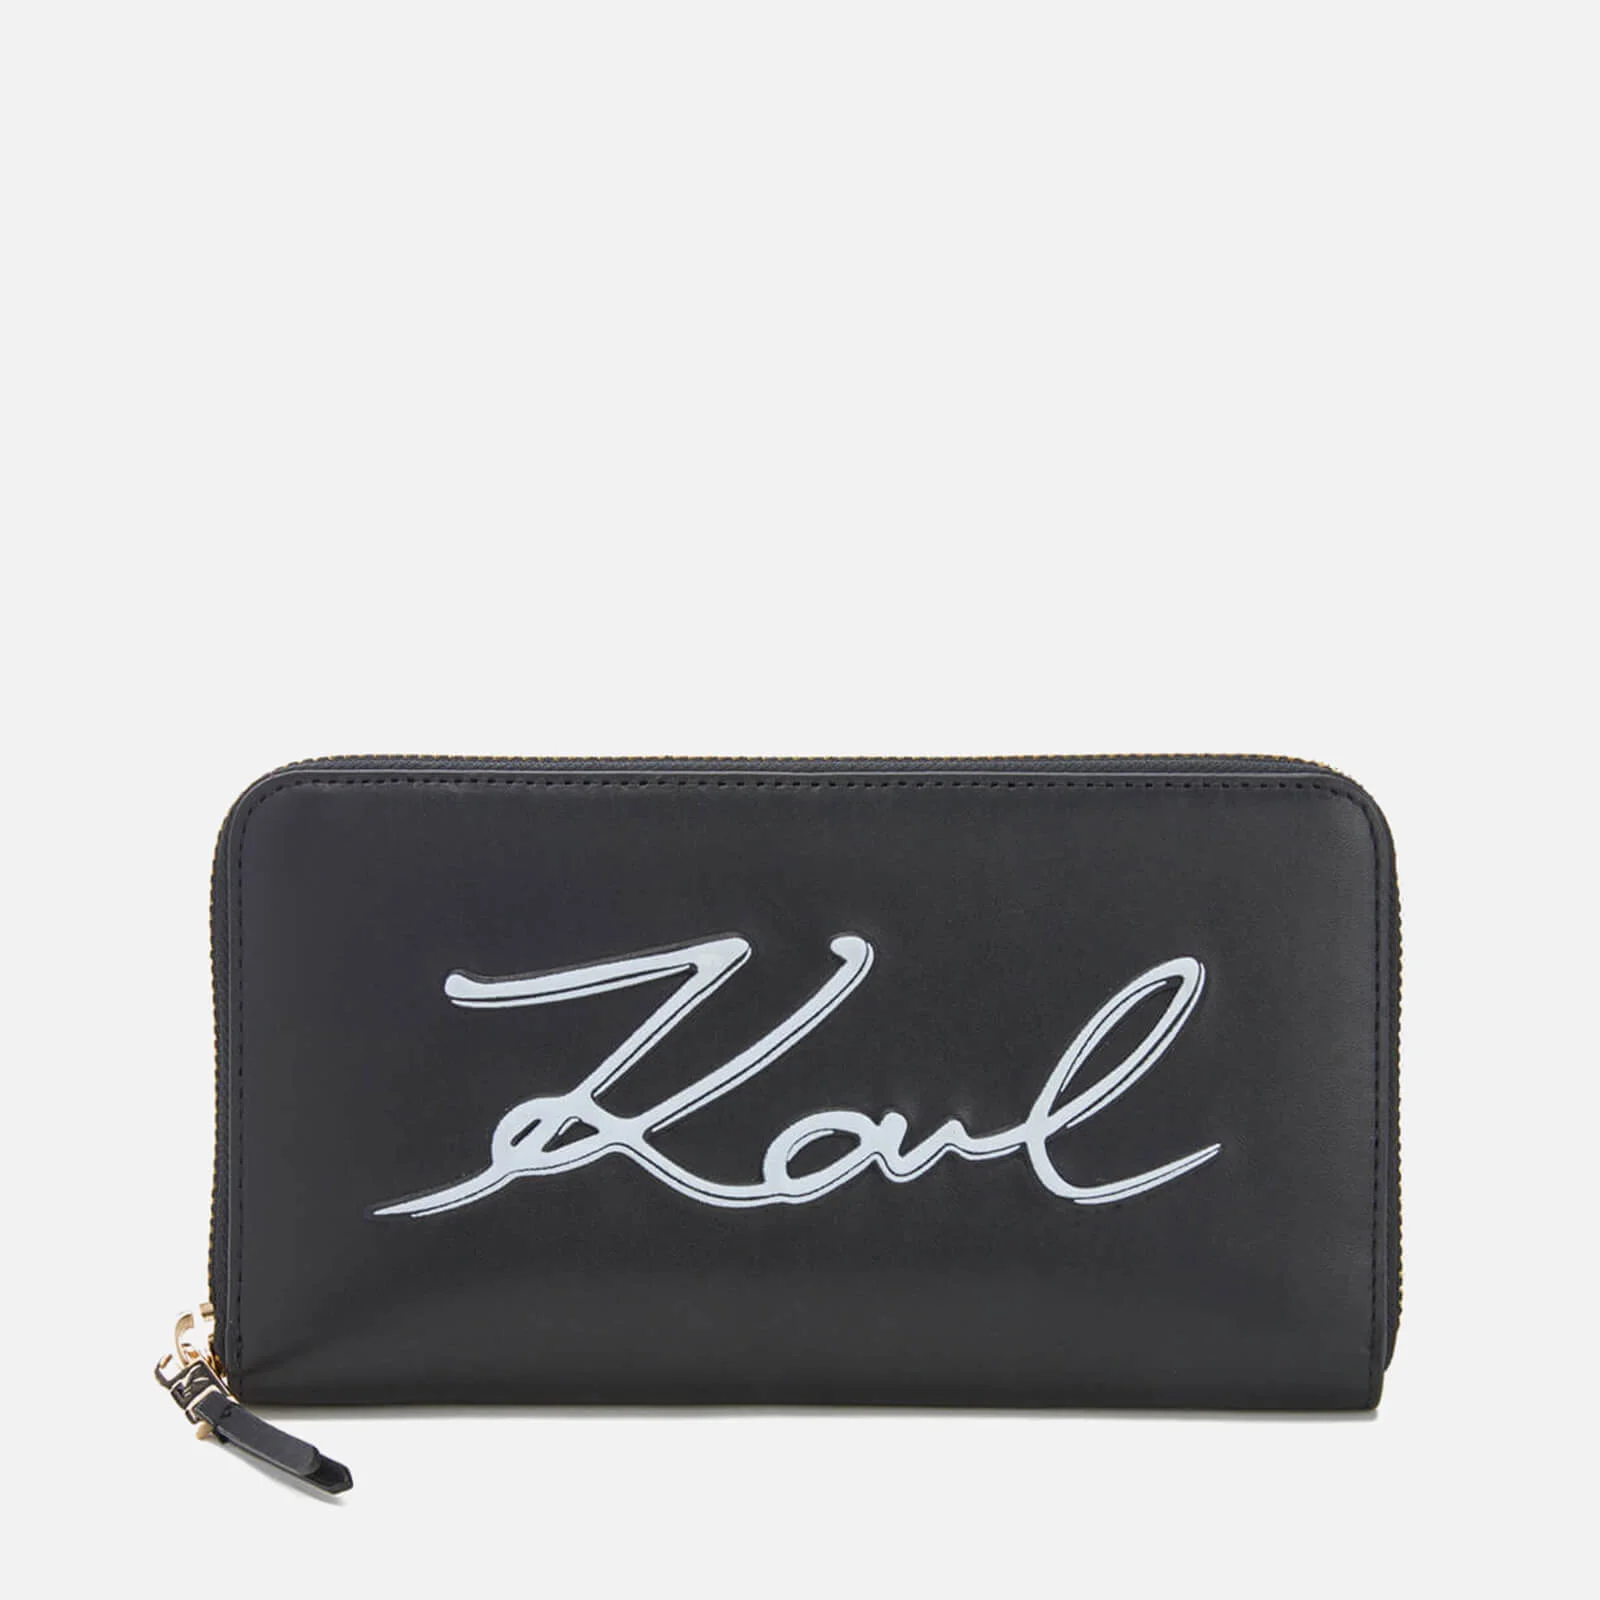 Karl Lagerfeld Women's K/Metal Signature Zip Wallet - Black Image 1